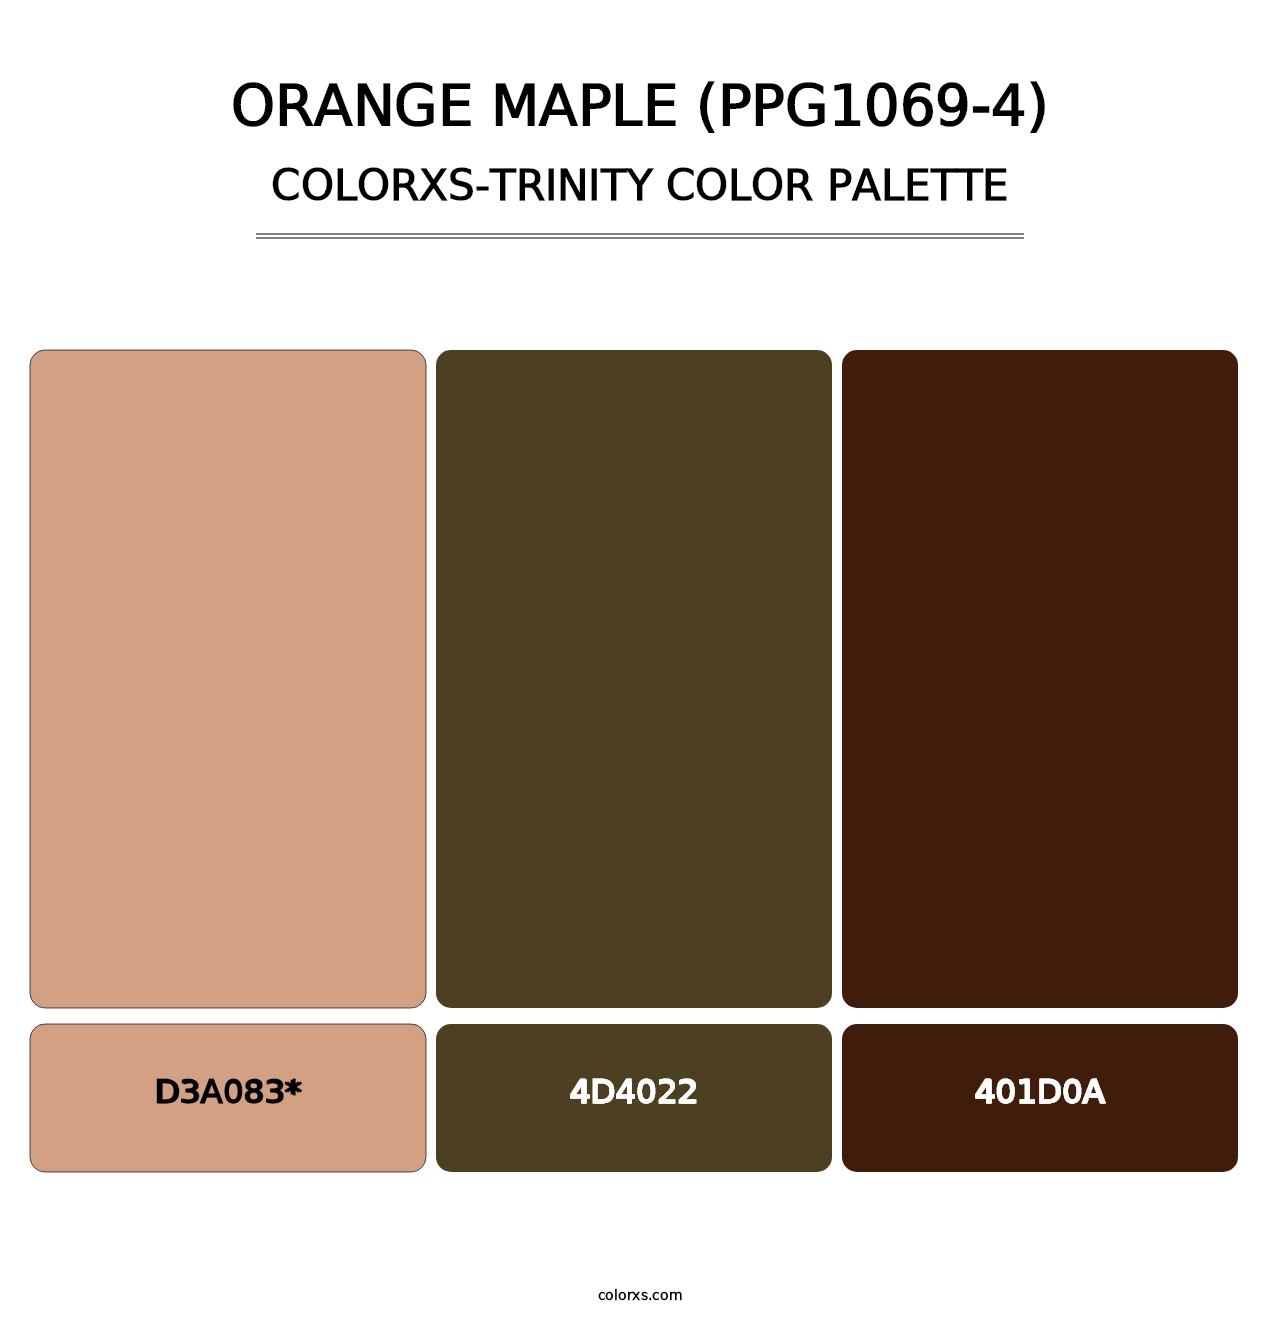 Orange Maple (PPG1069-4) - Colorxs Trinity Palette